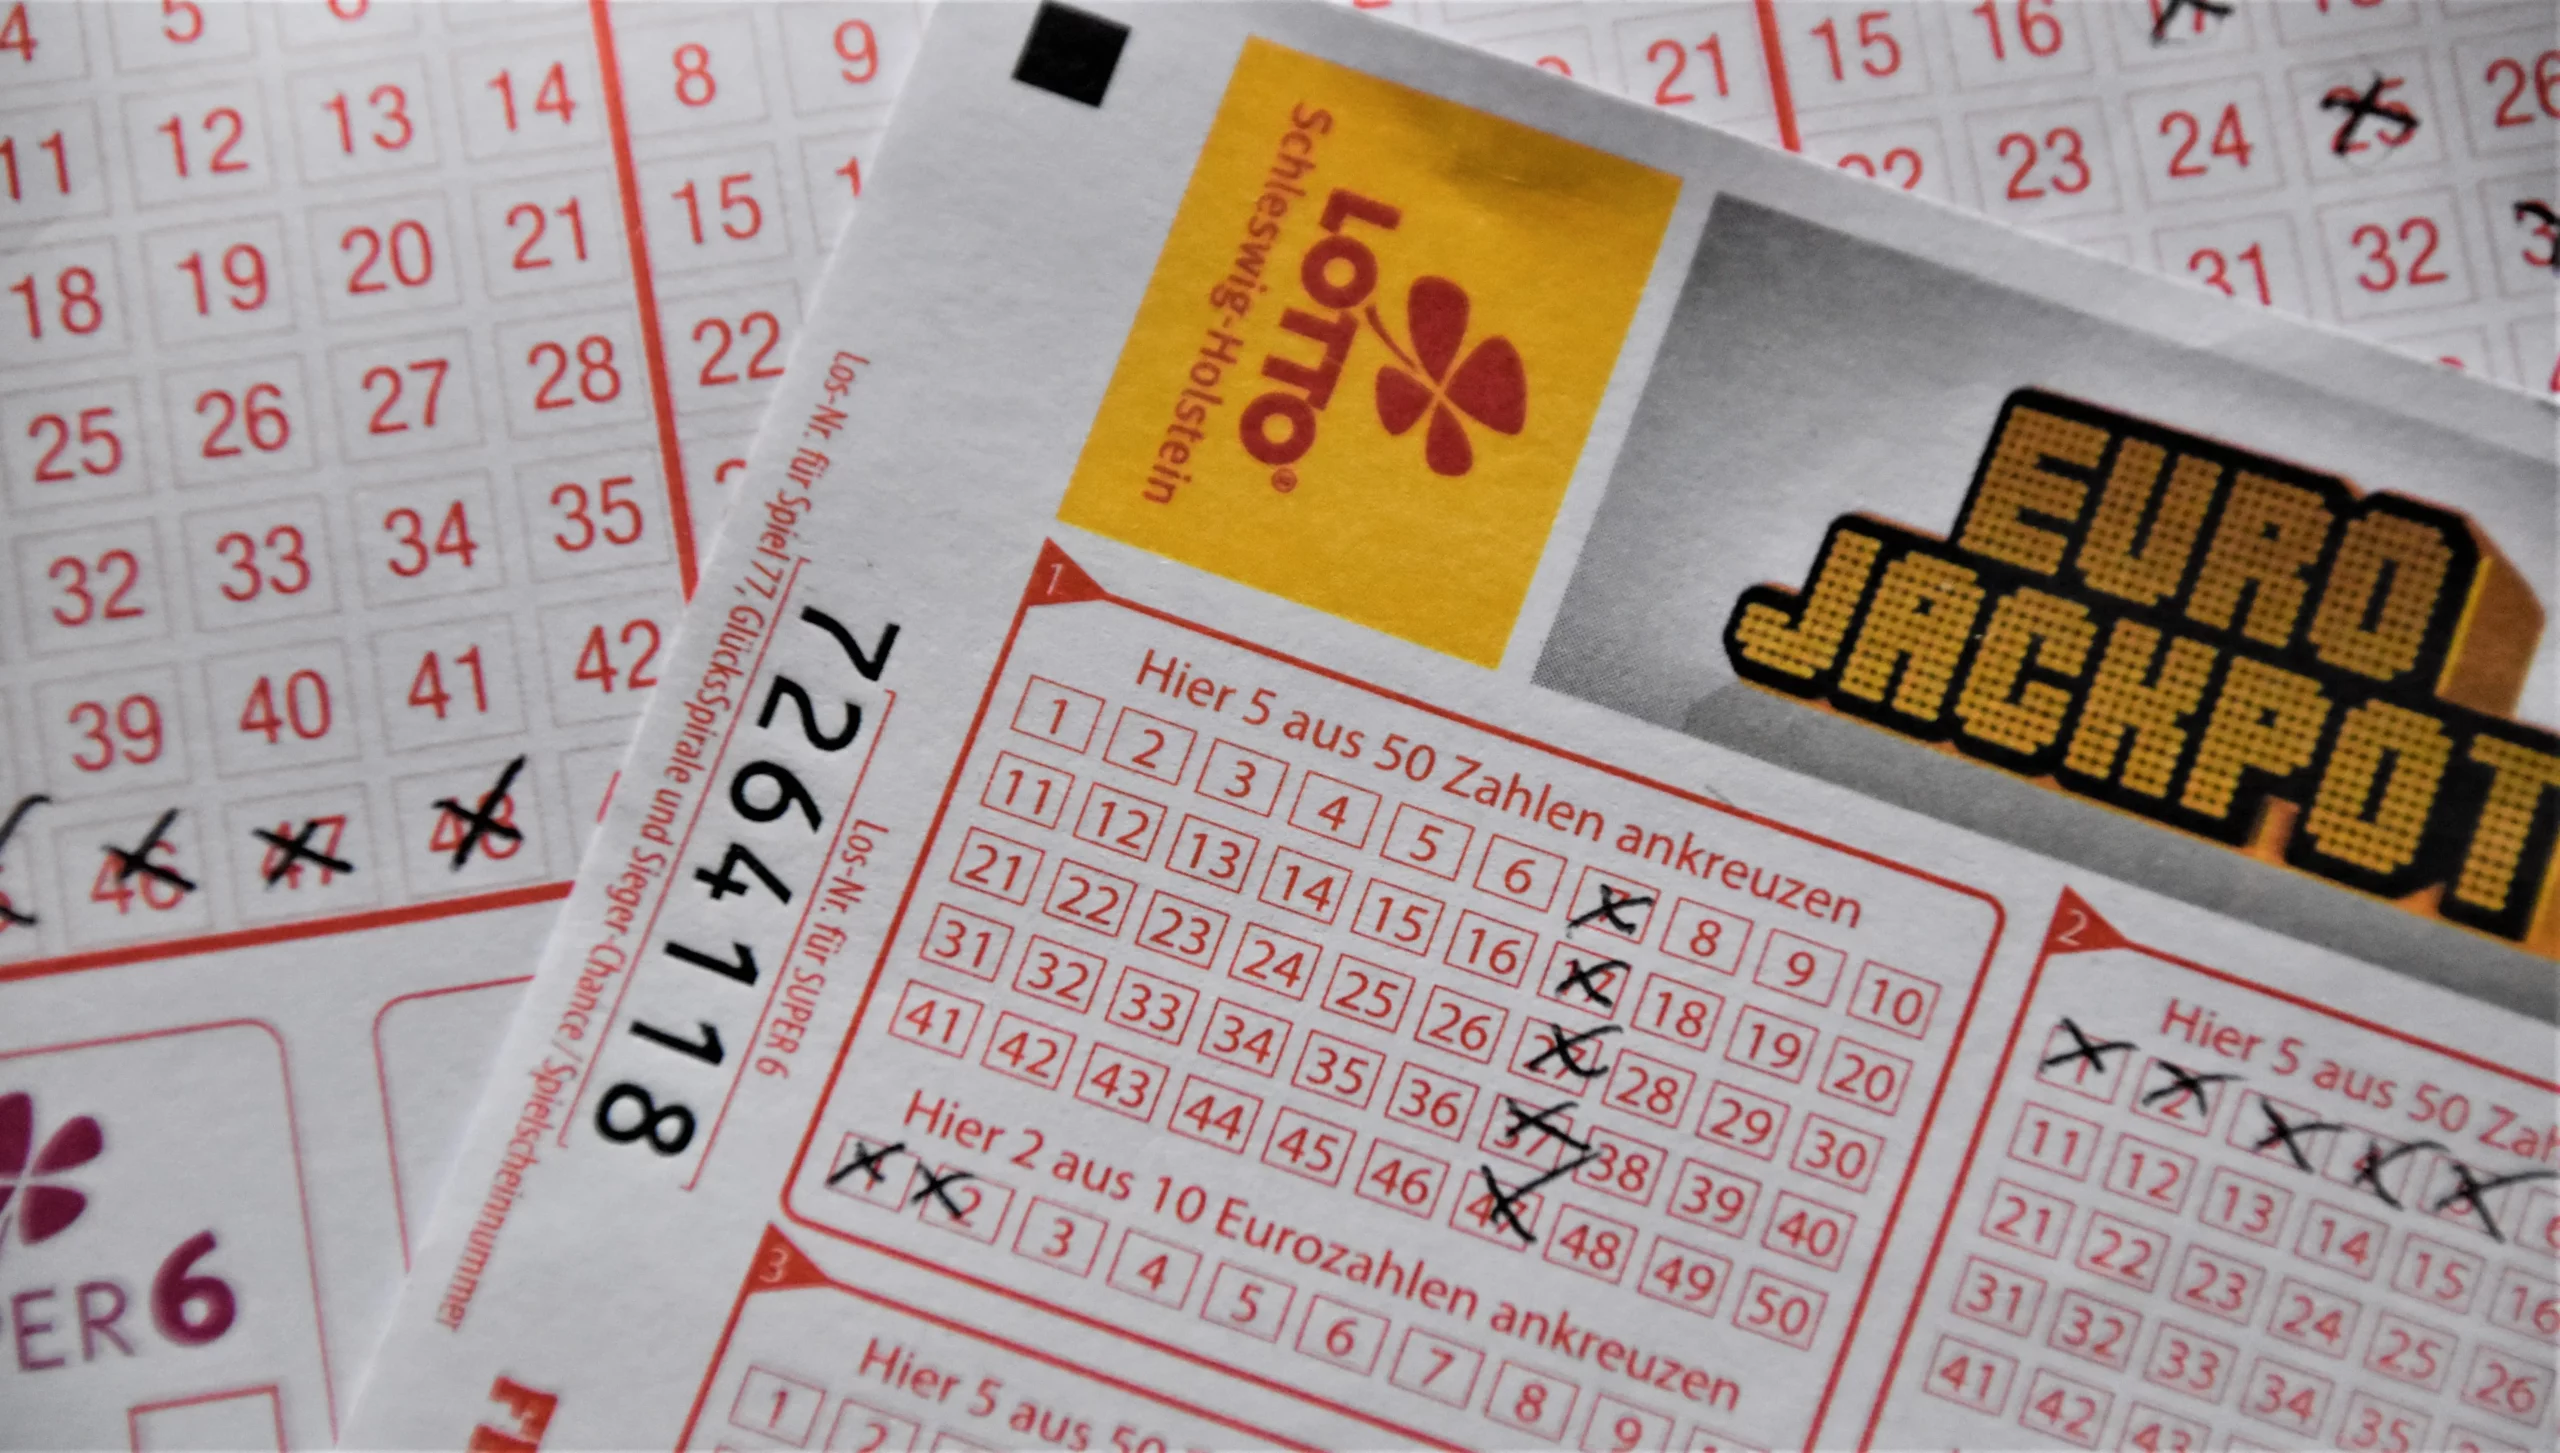 Euro jackpot lottery ticket